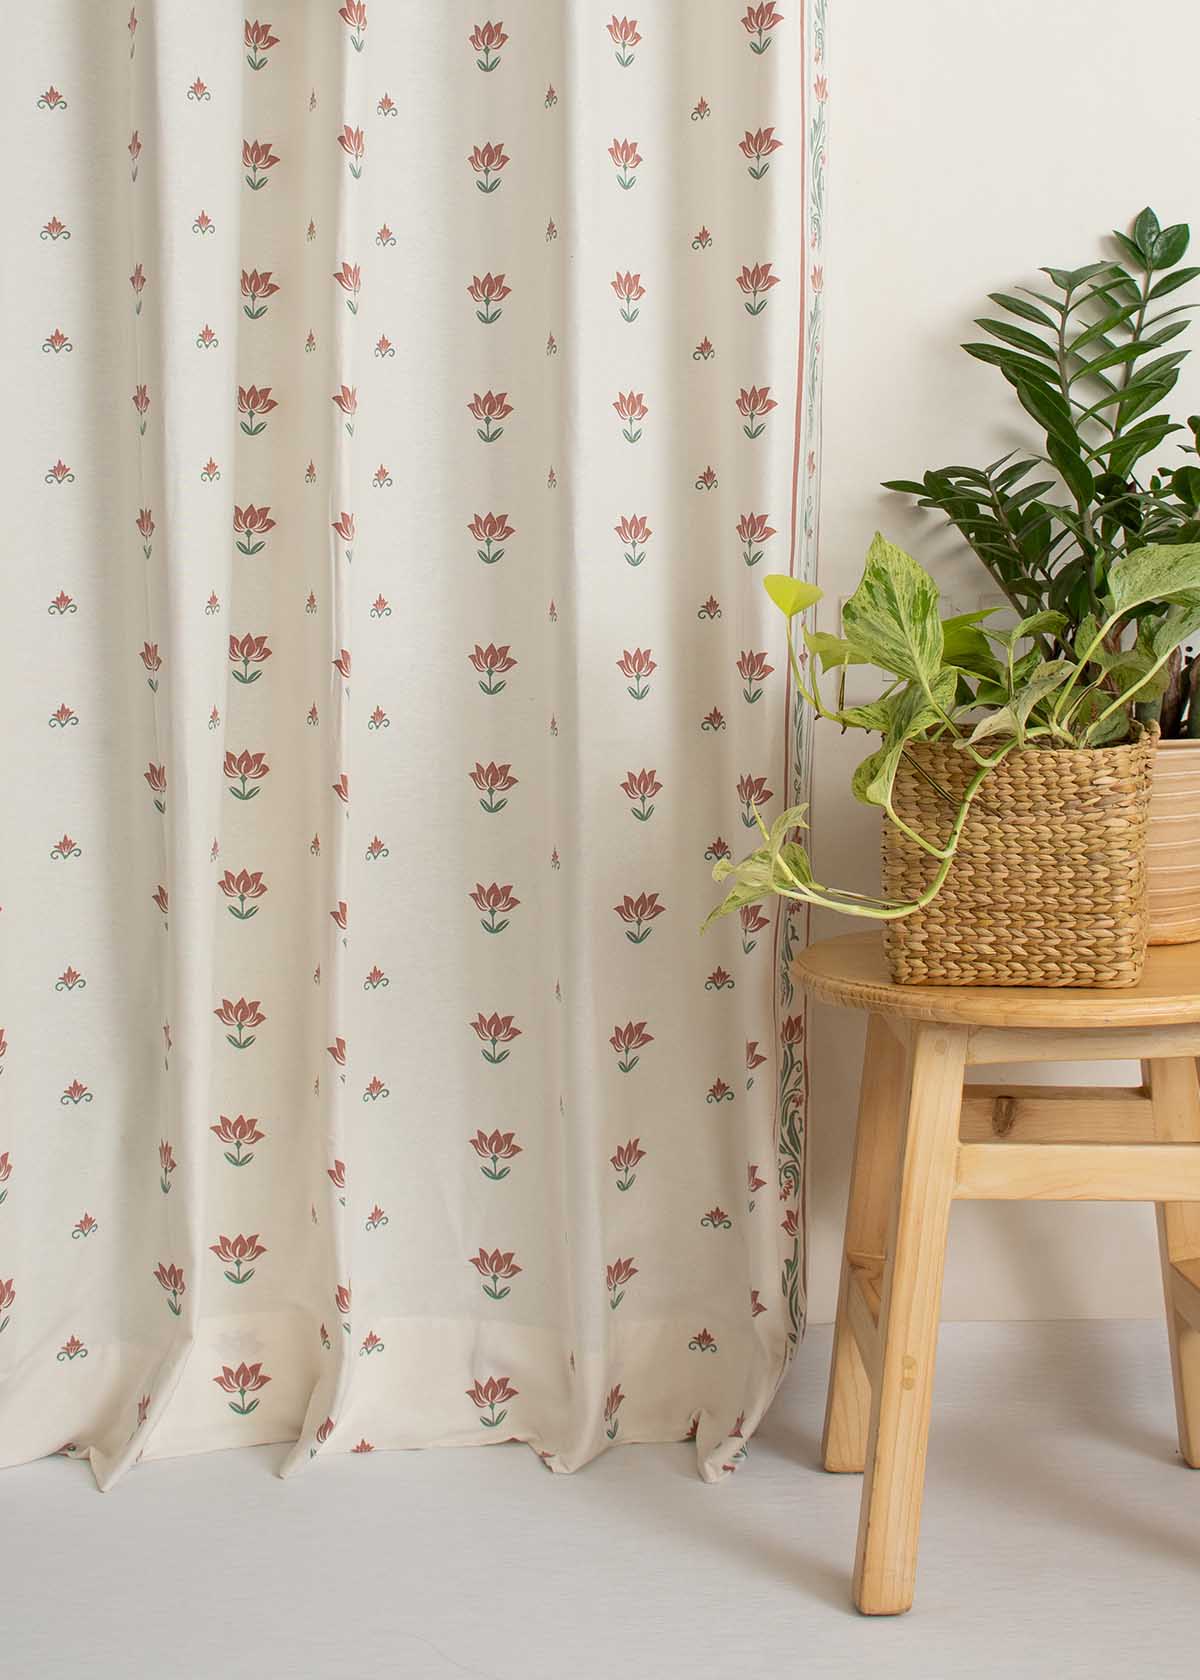 Lotus Pond 100% cotton minimal curtain for living room - Room darkening - Multicolor - Pack of 1